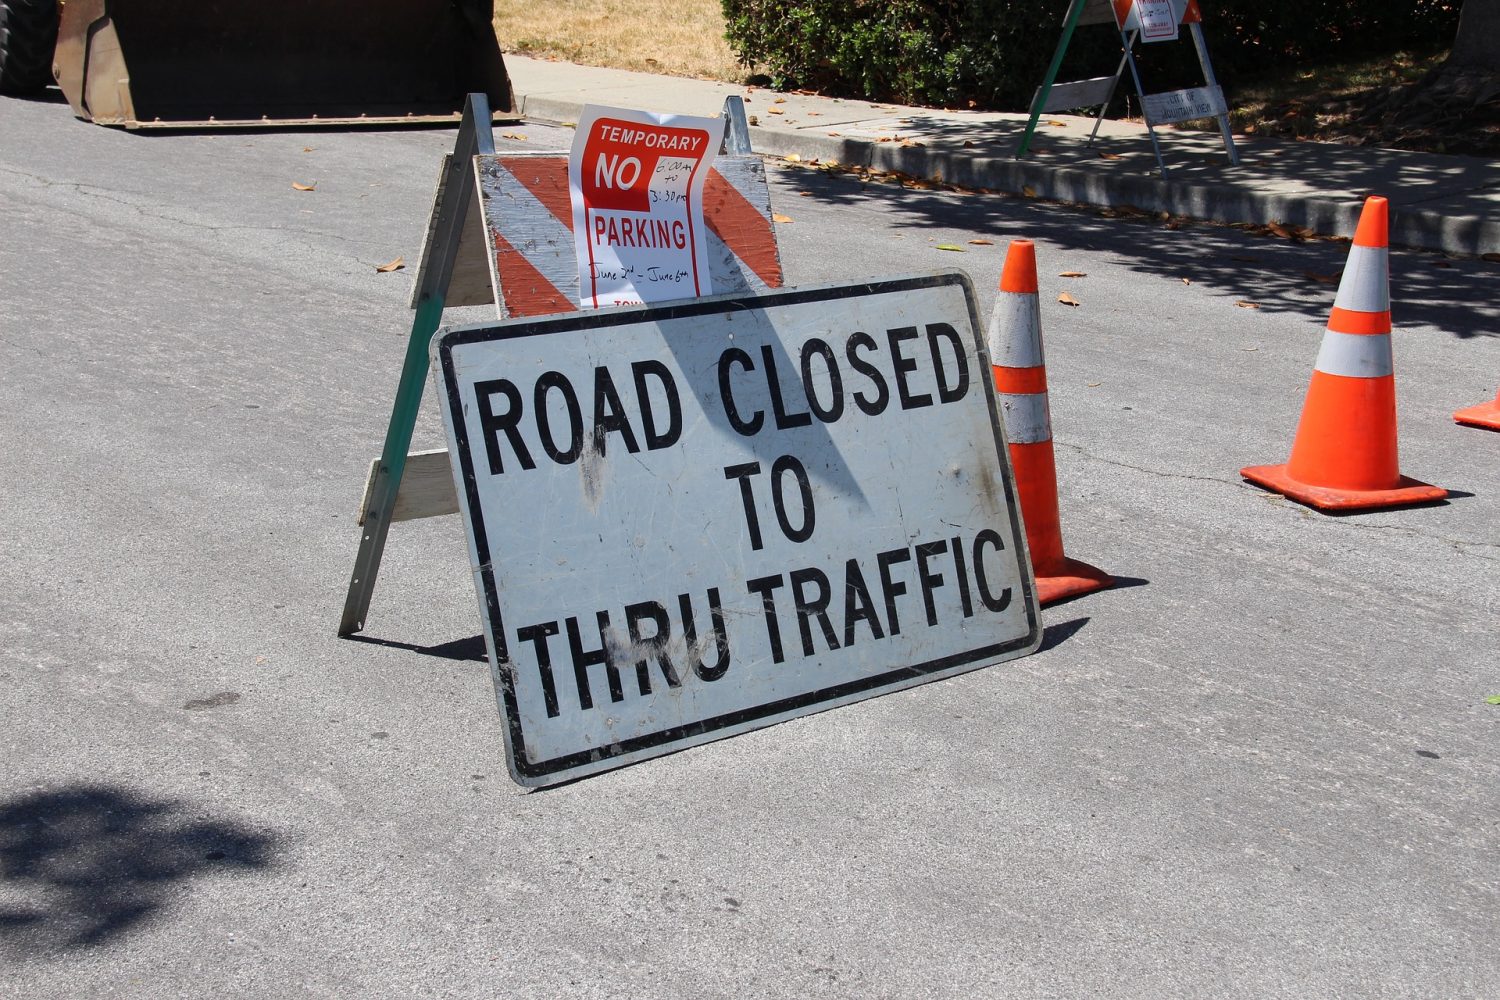 WisDOT Road Construction Update #24